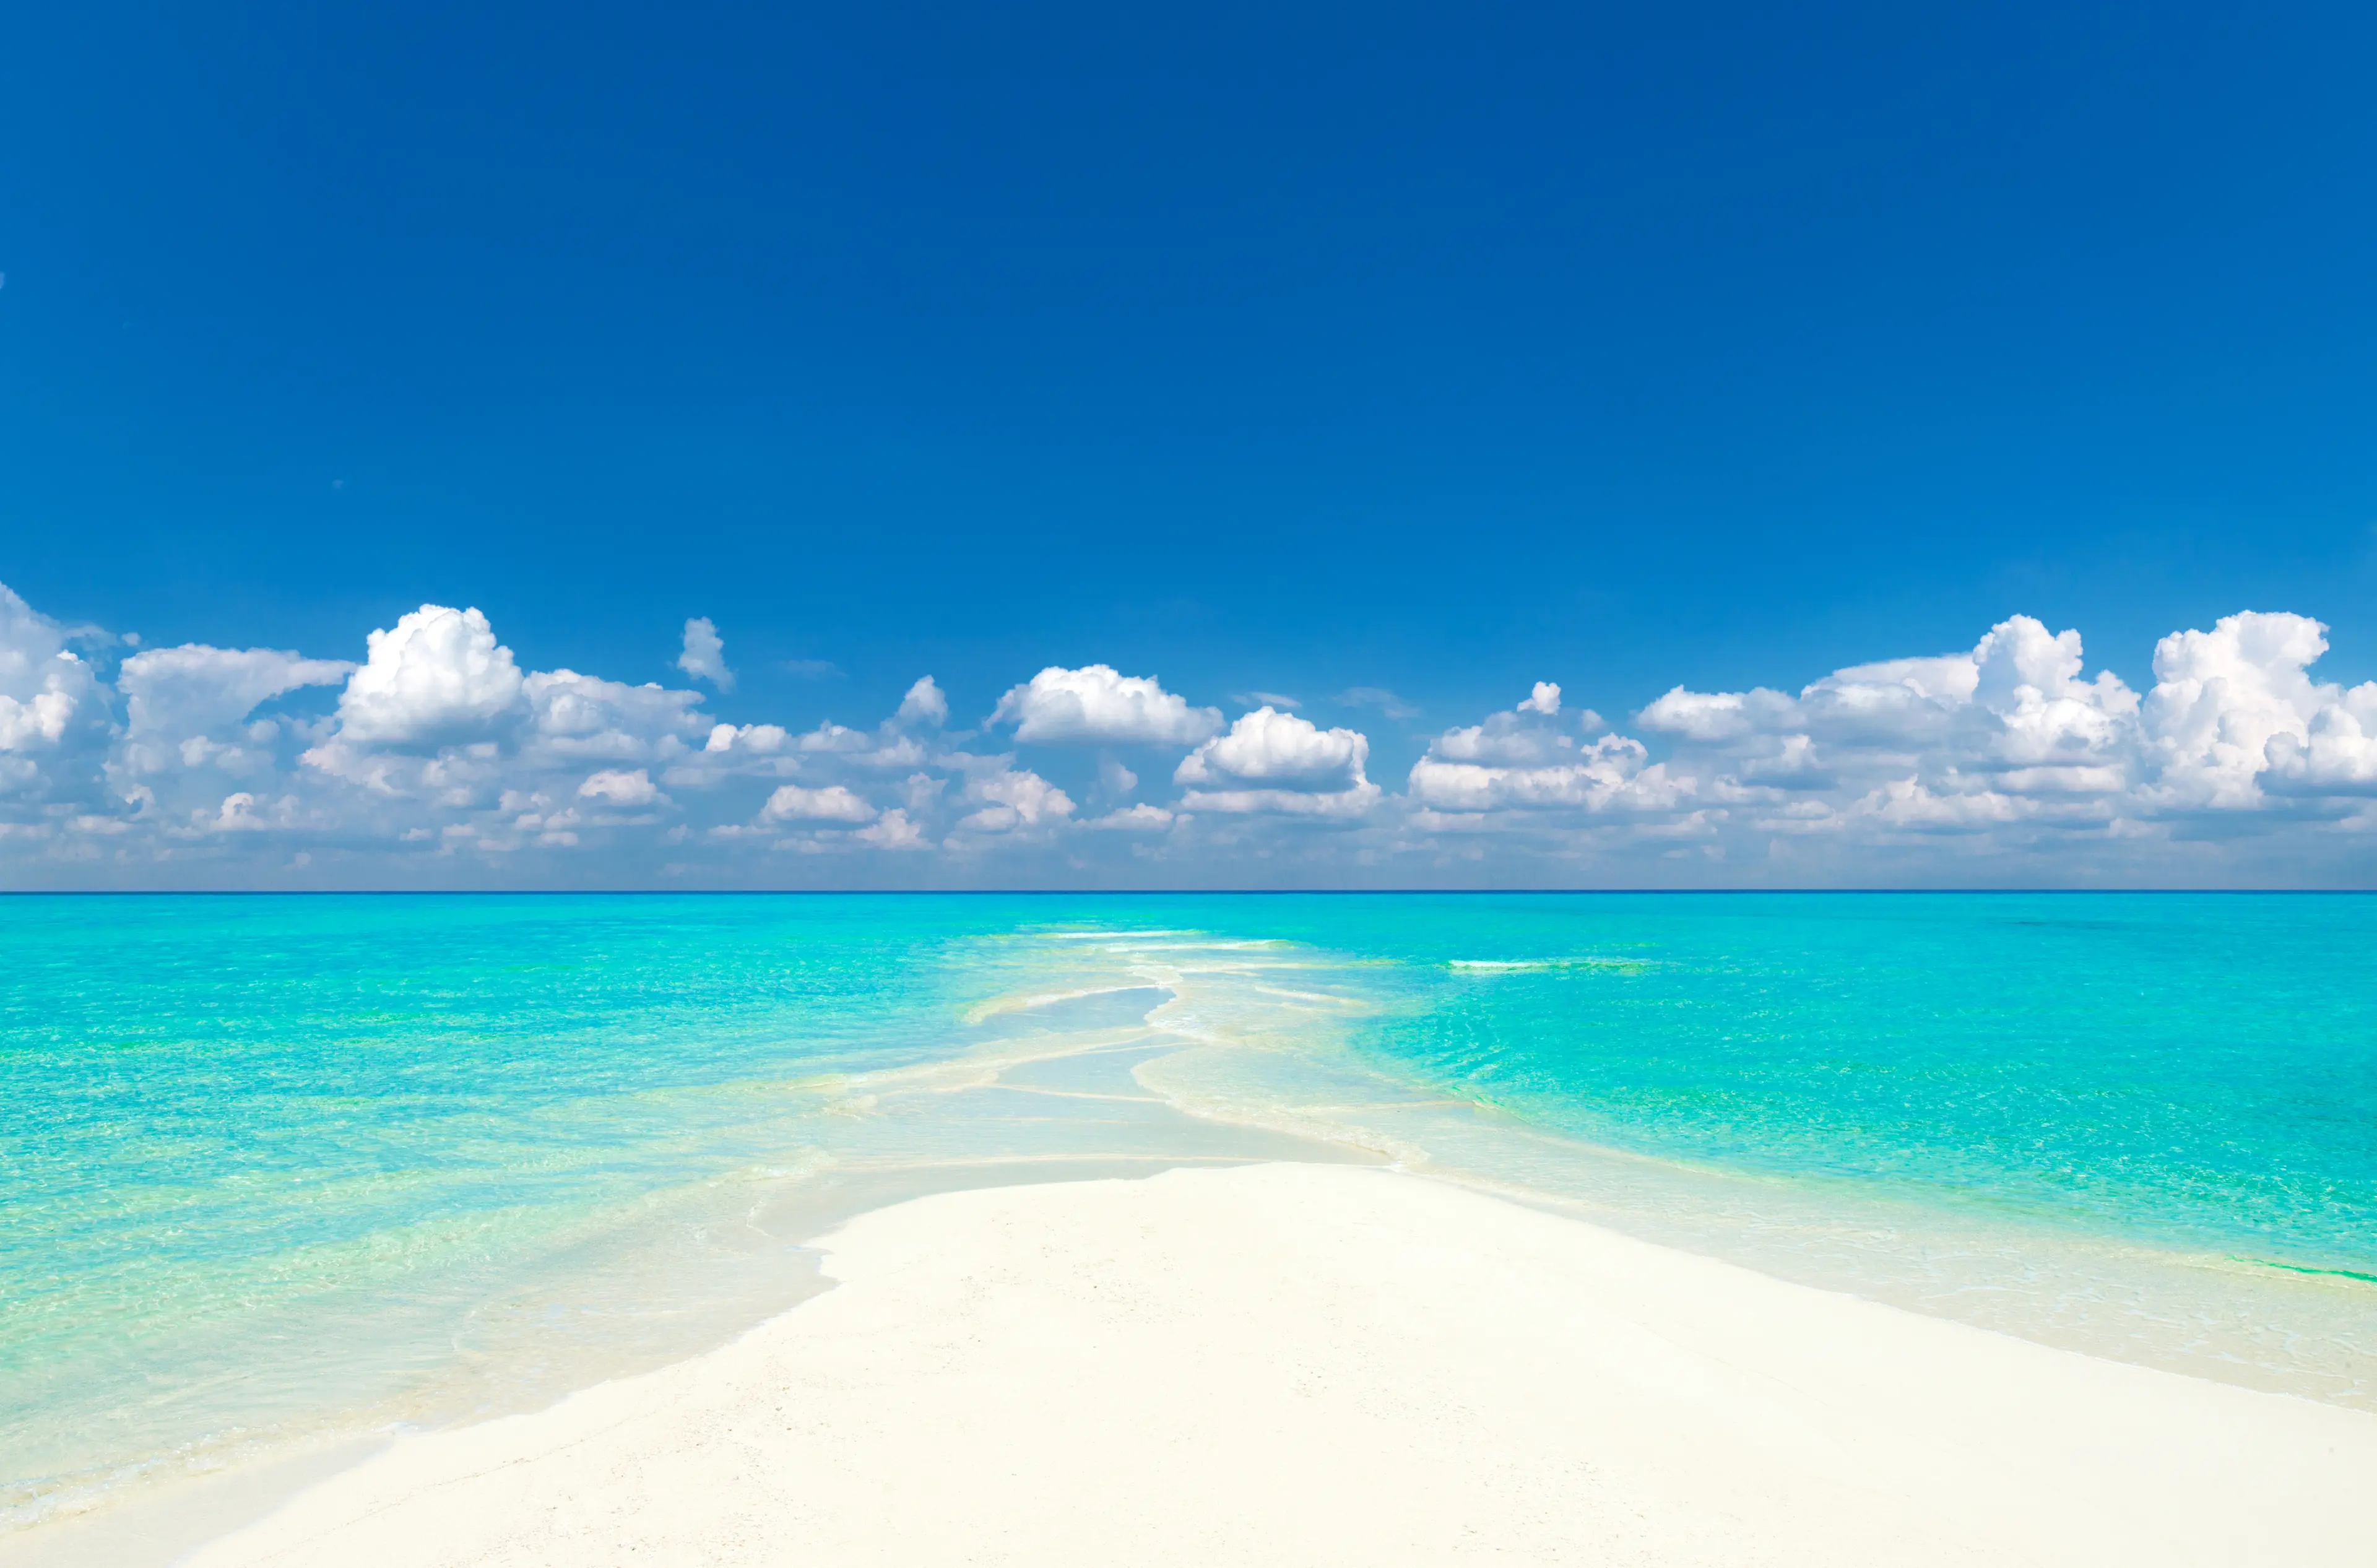 7-Day Dream Vacation: Explore the Stunning Maldives